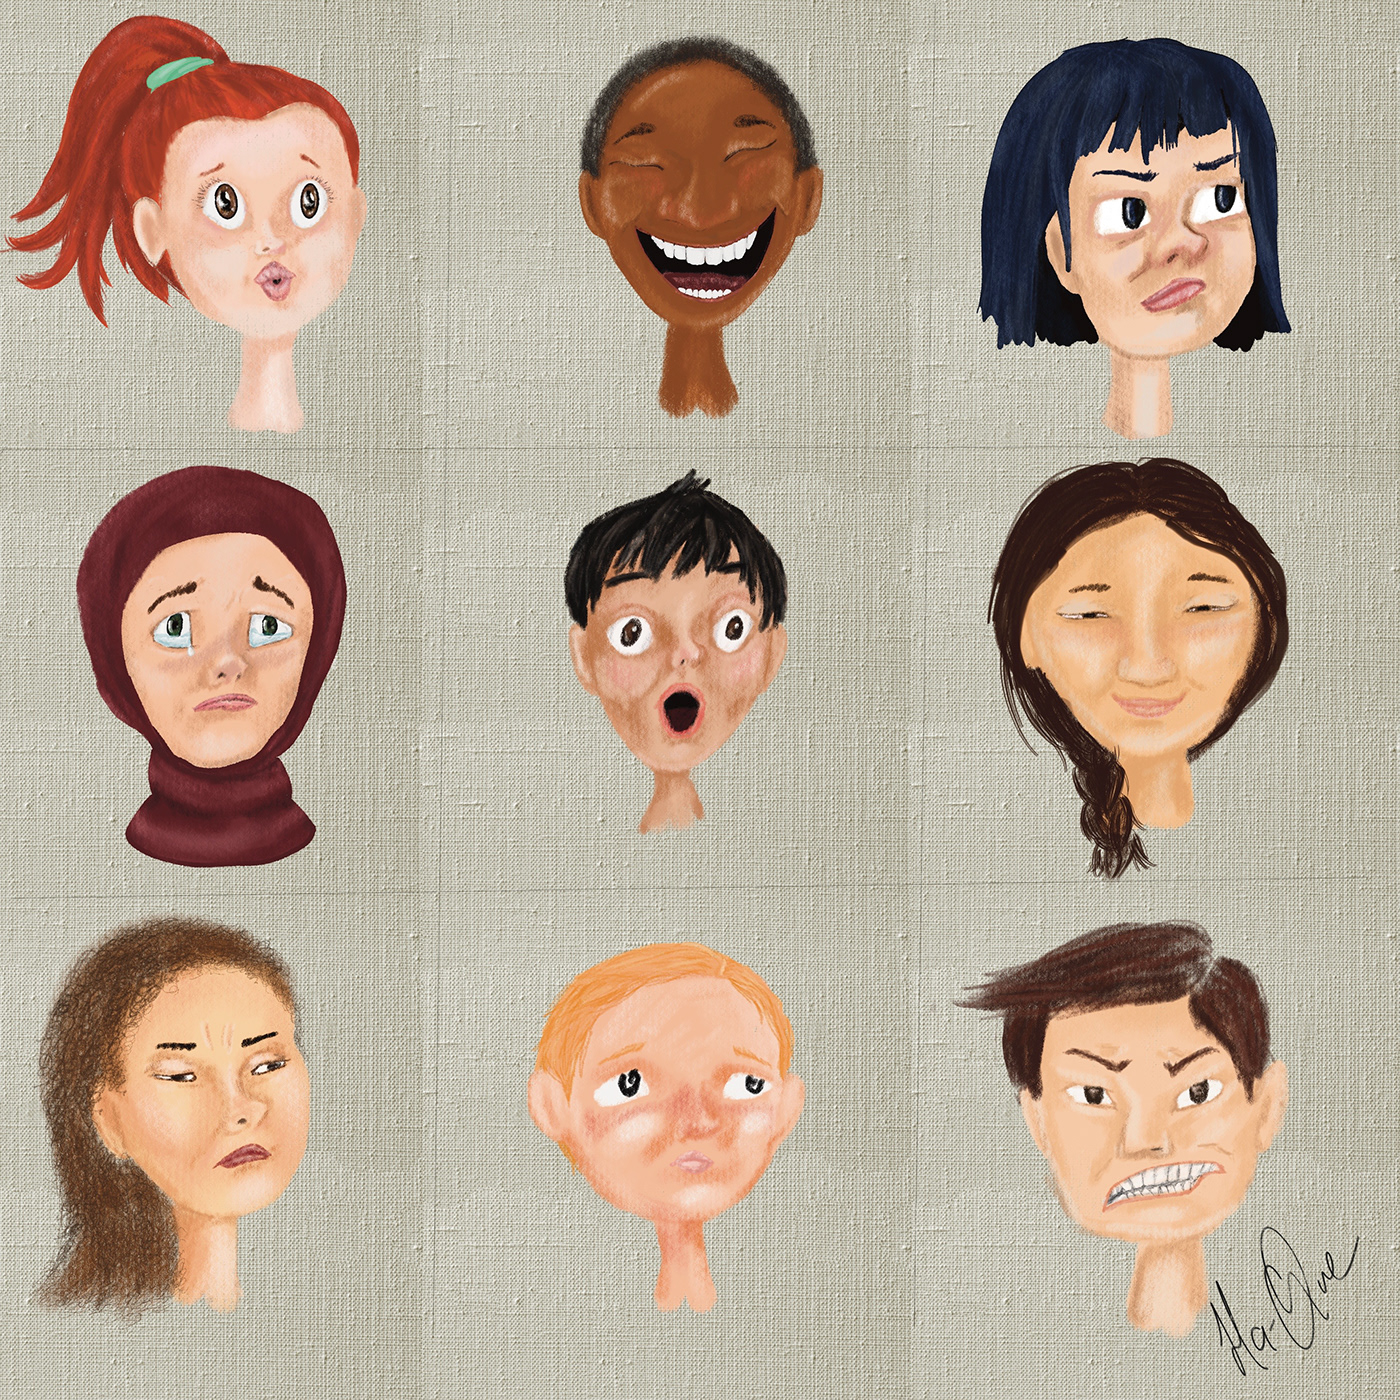 emotions face ifadeler International mimics people